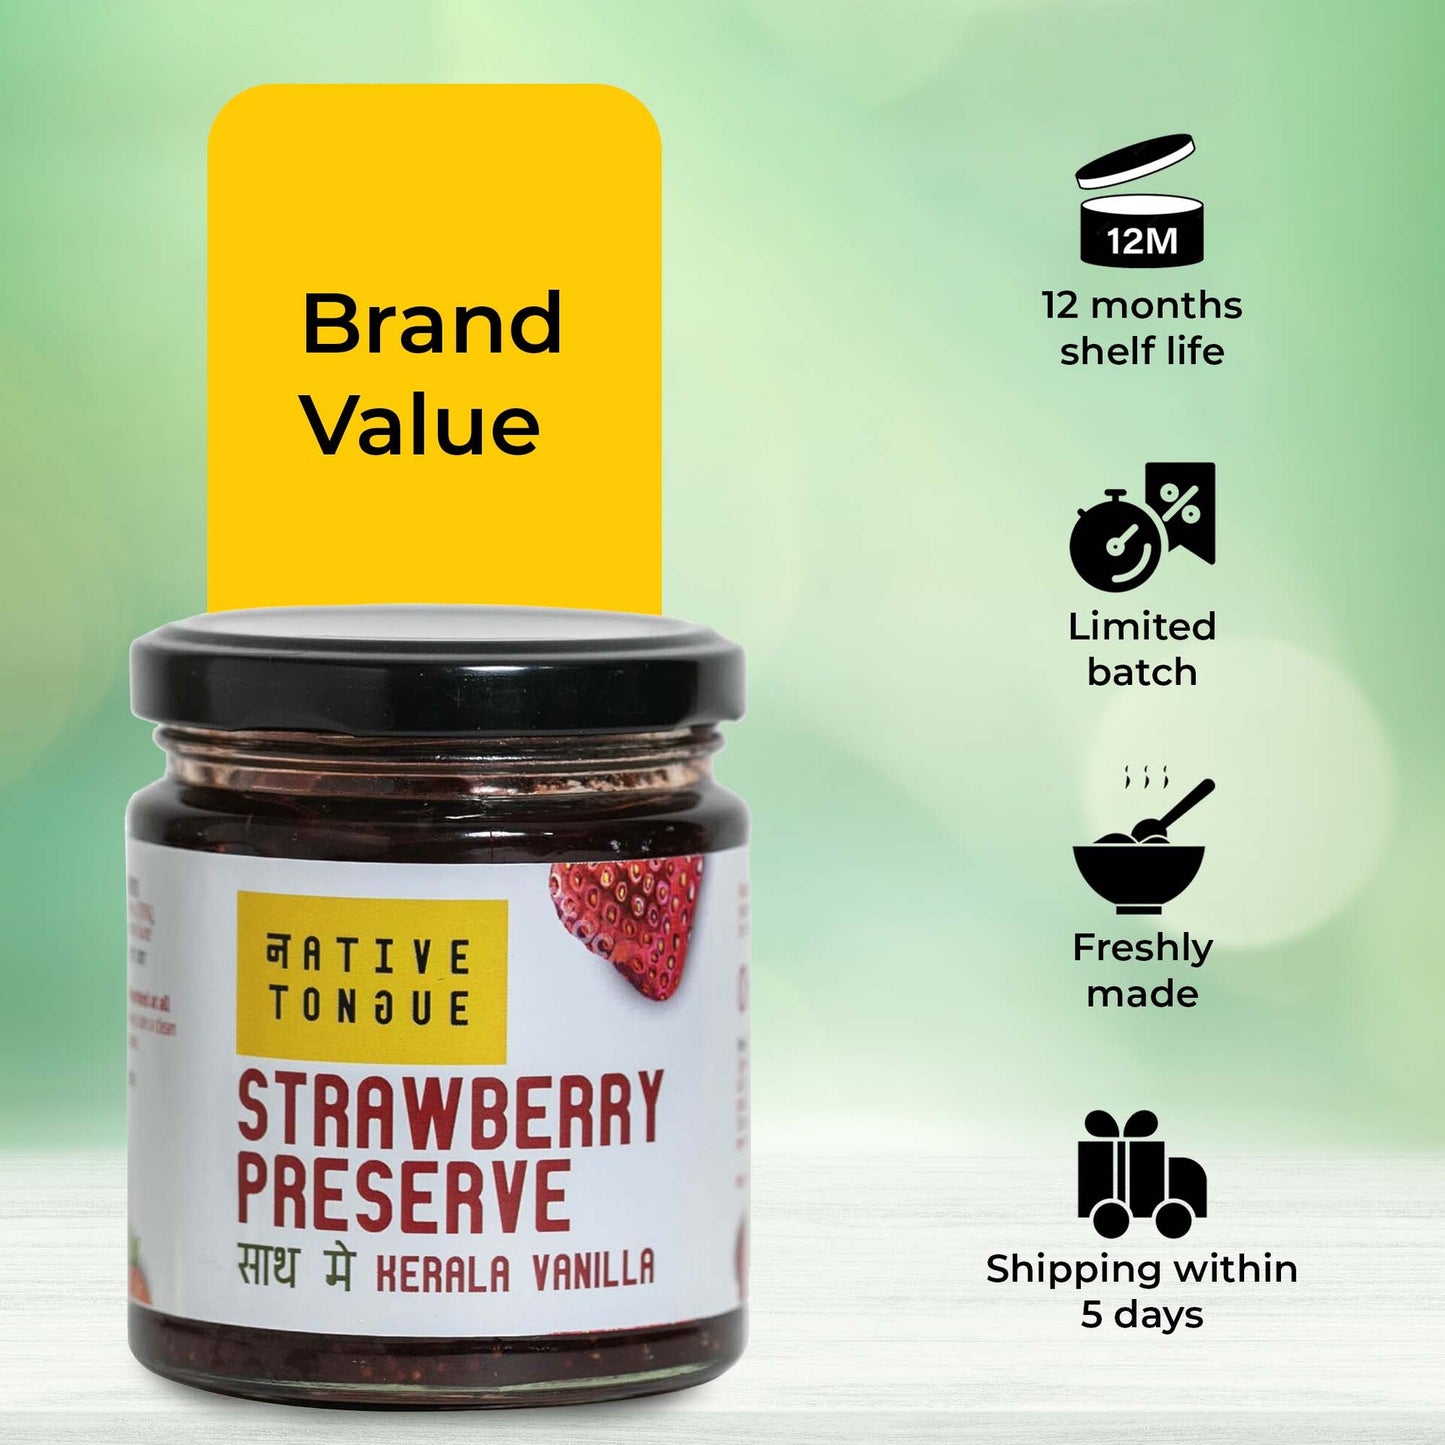 Strawberry Preserve with Kerala Vanilla | 70% Fruit | Low Sugar